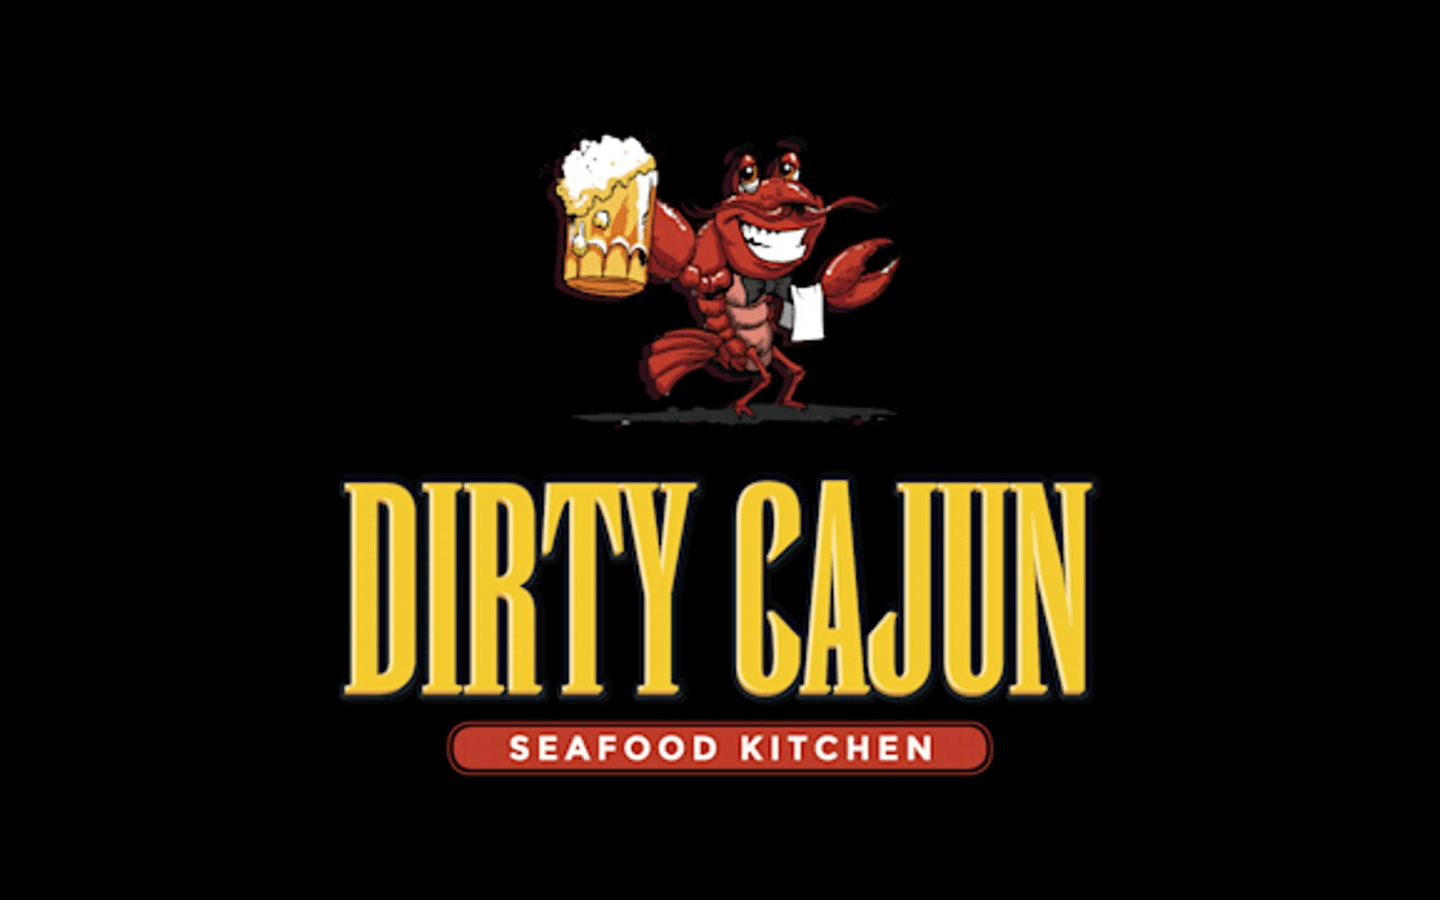 Dirty Cajun Seafood Kitchen Rewards